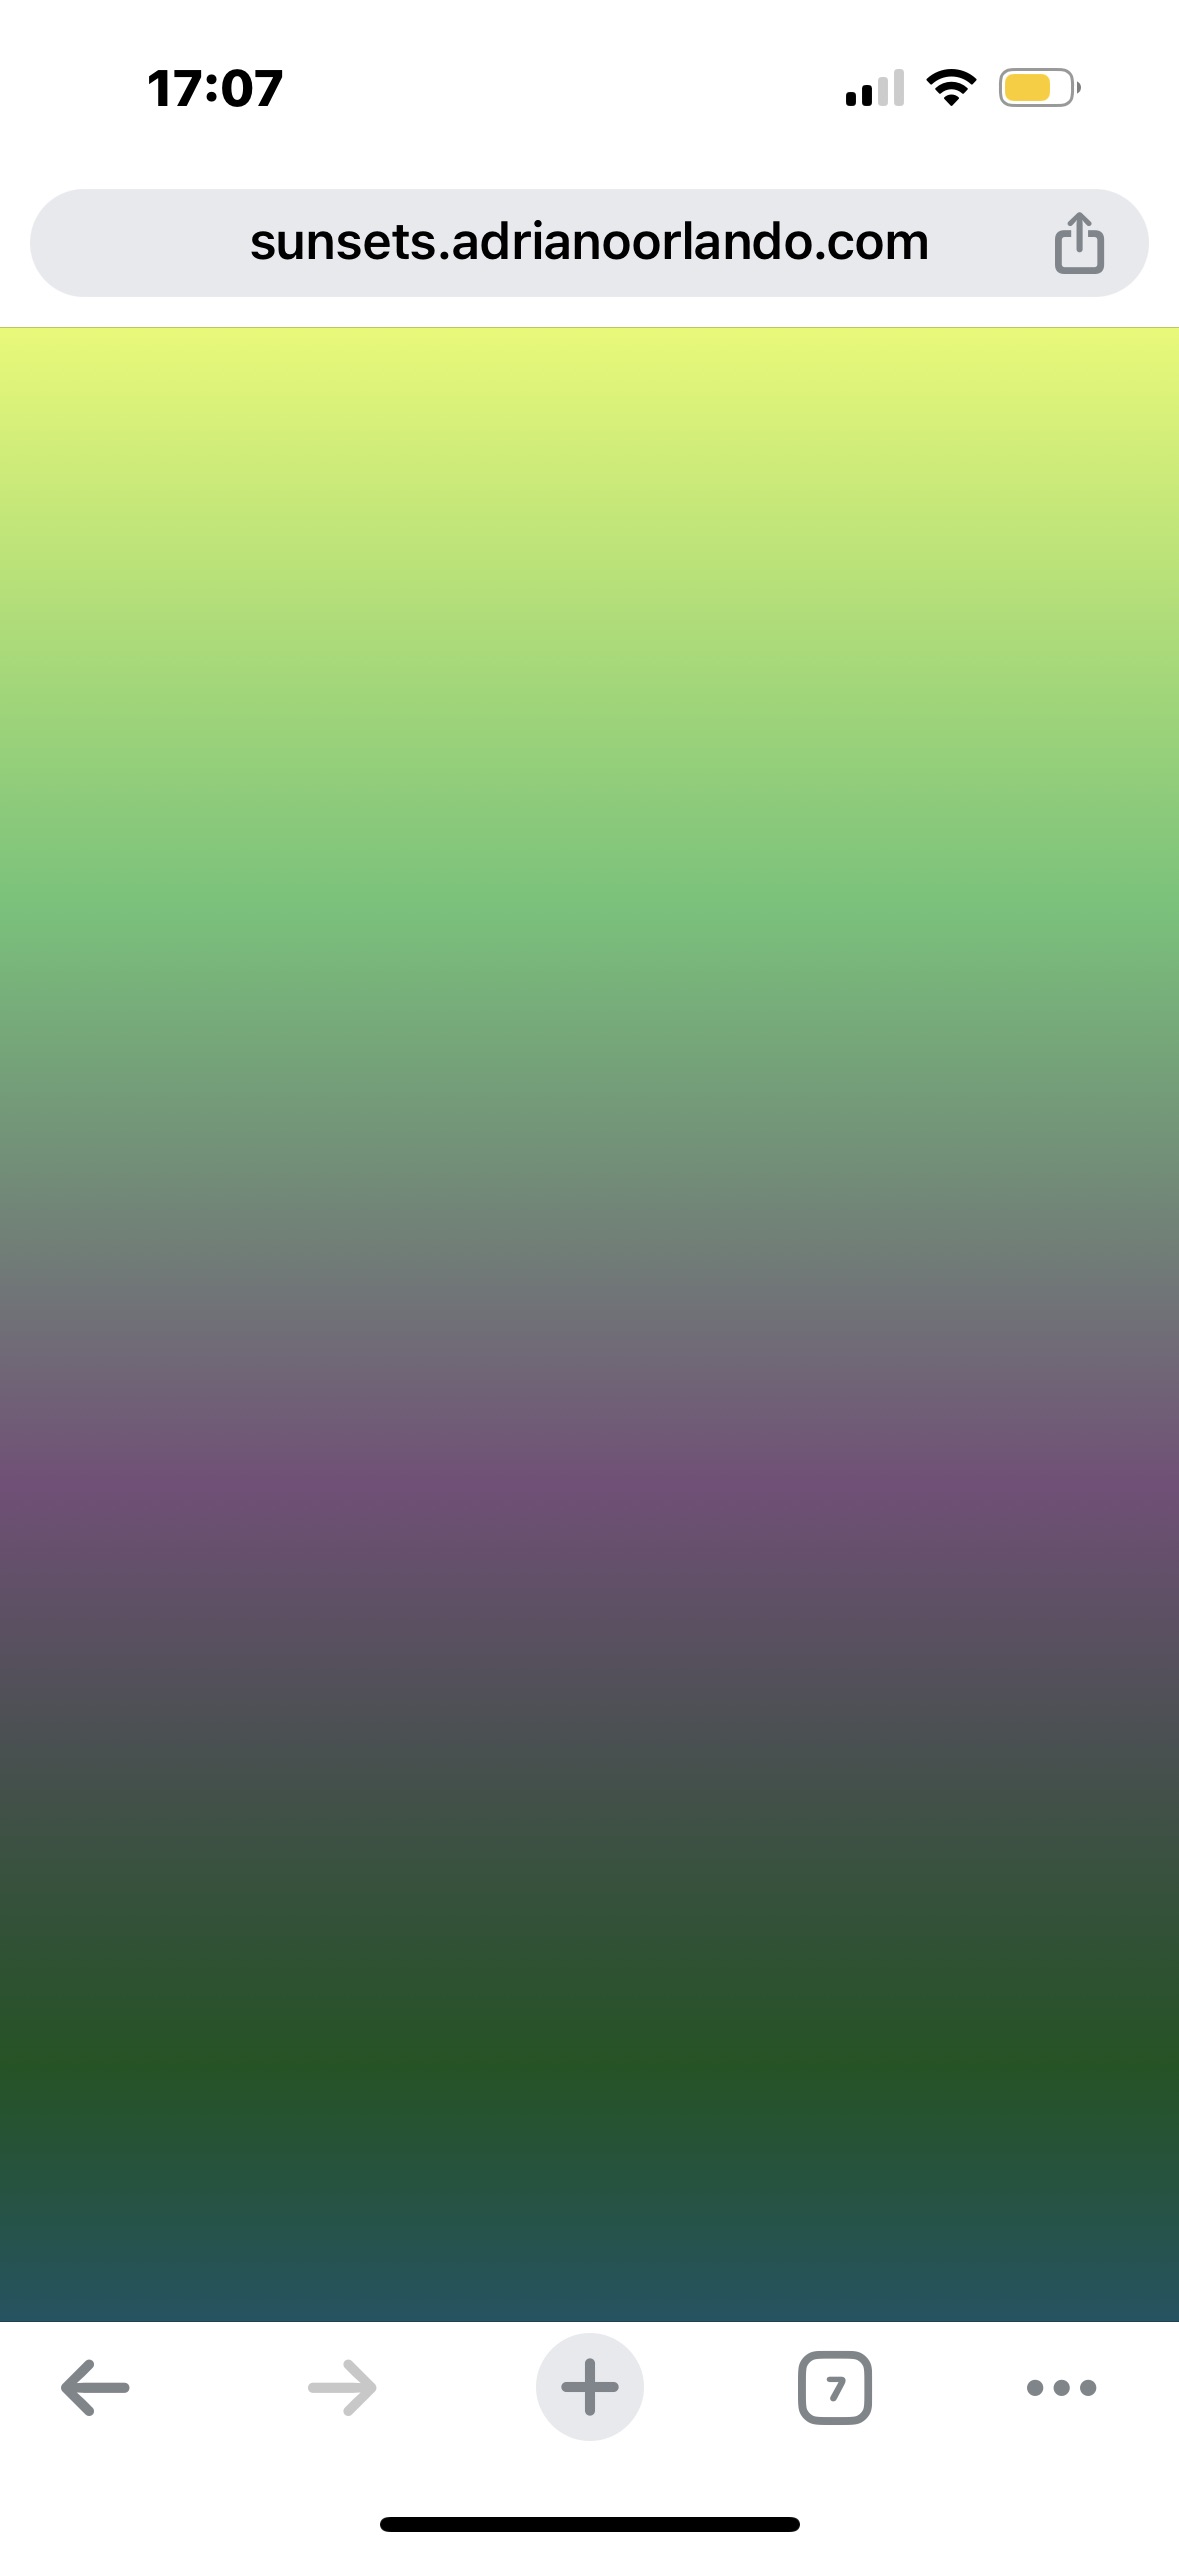 Sunsets web application by Adriano Orlando. Light green, green, purple and dark green screenshot.